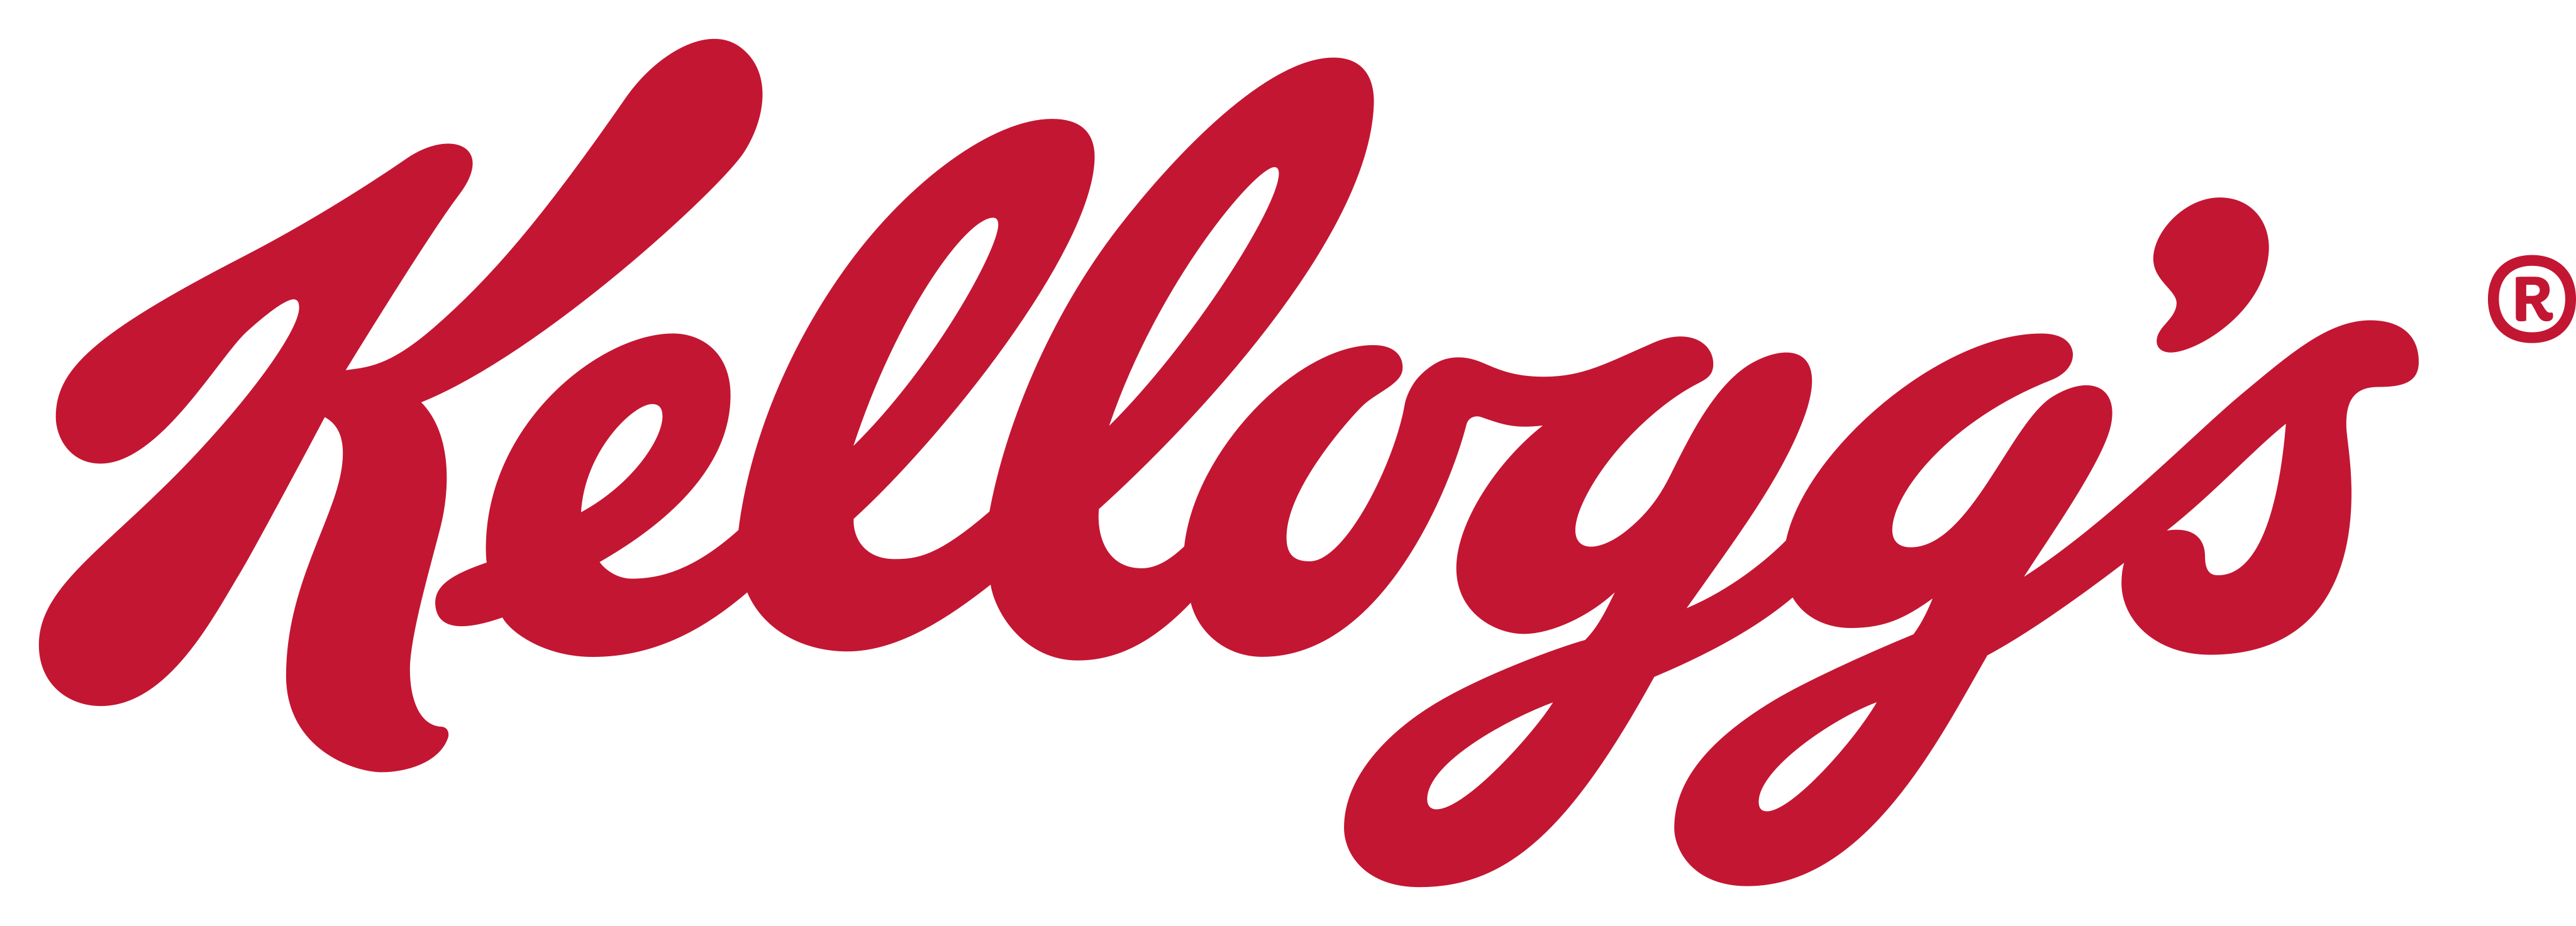 kelloggs logo 1 - Kellogg’s Logo